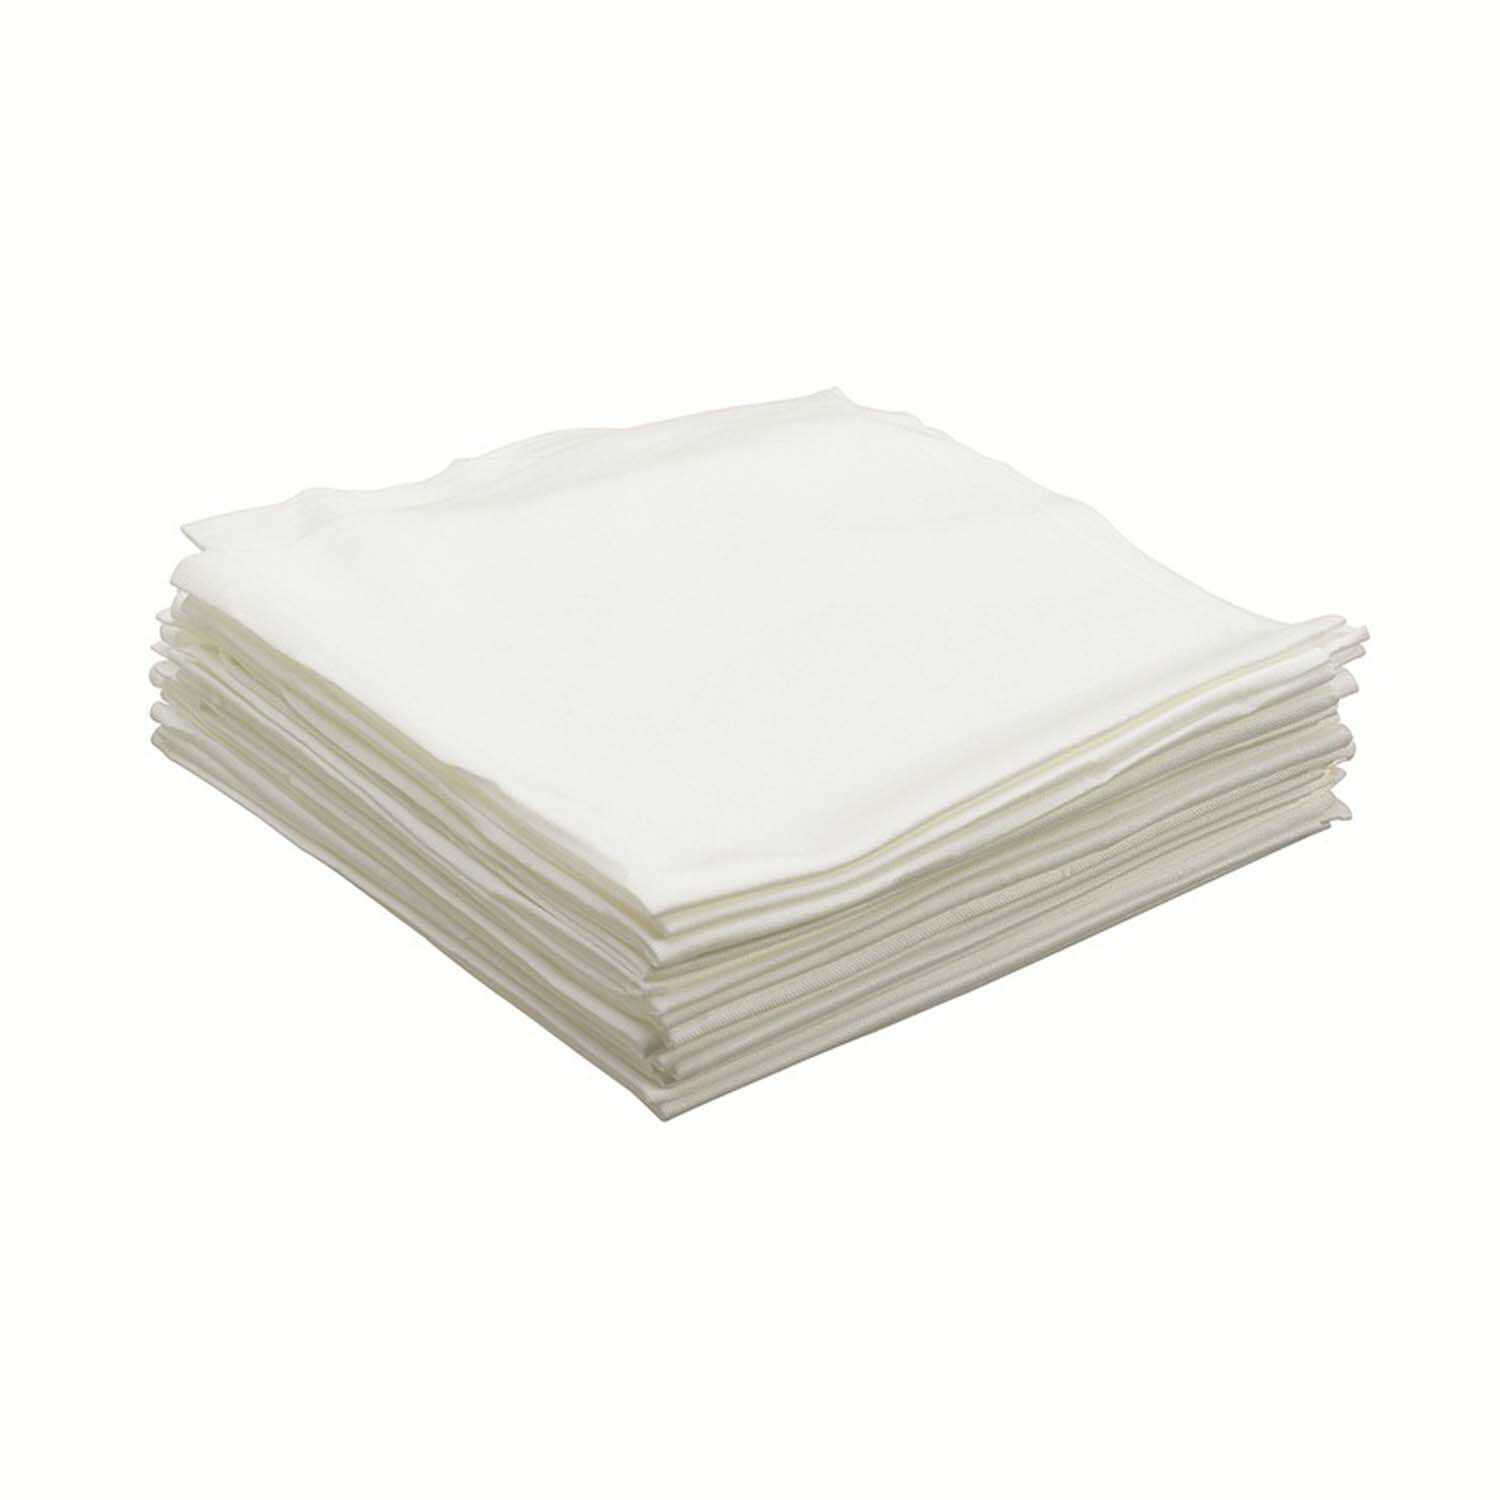 KIMTECH Knitted Polyester Wiper / Flat Sheet / White / 30.5 cm x 30.5 cm, 30903 ( Pack of 8 )